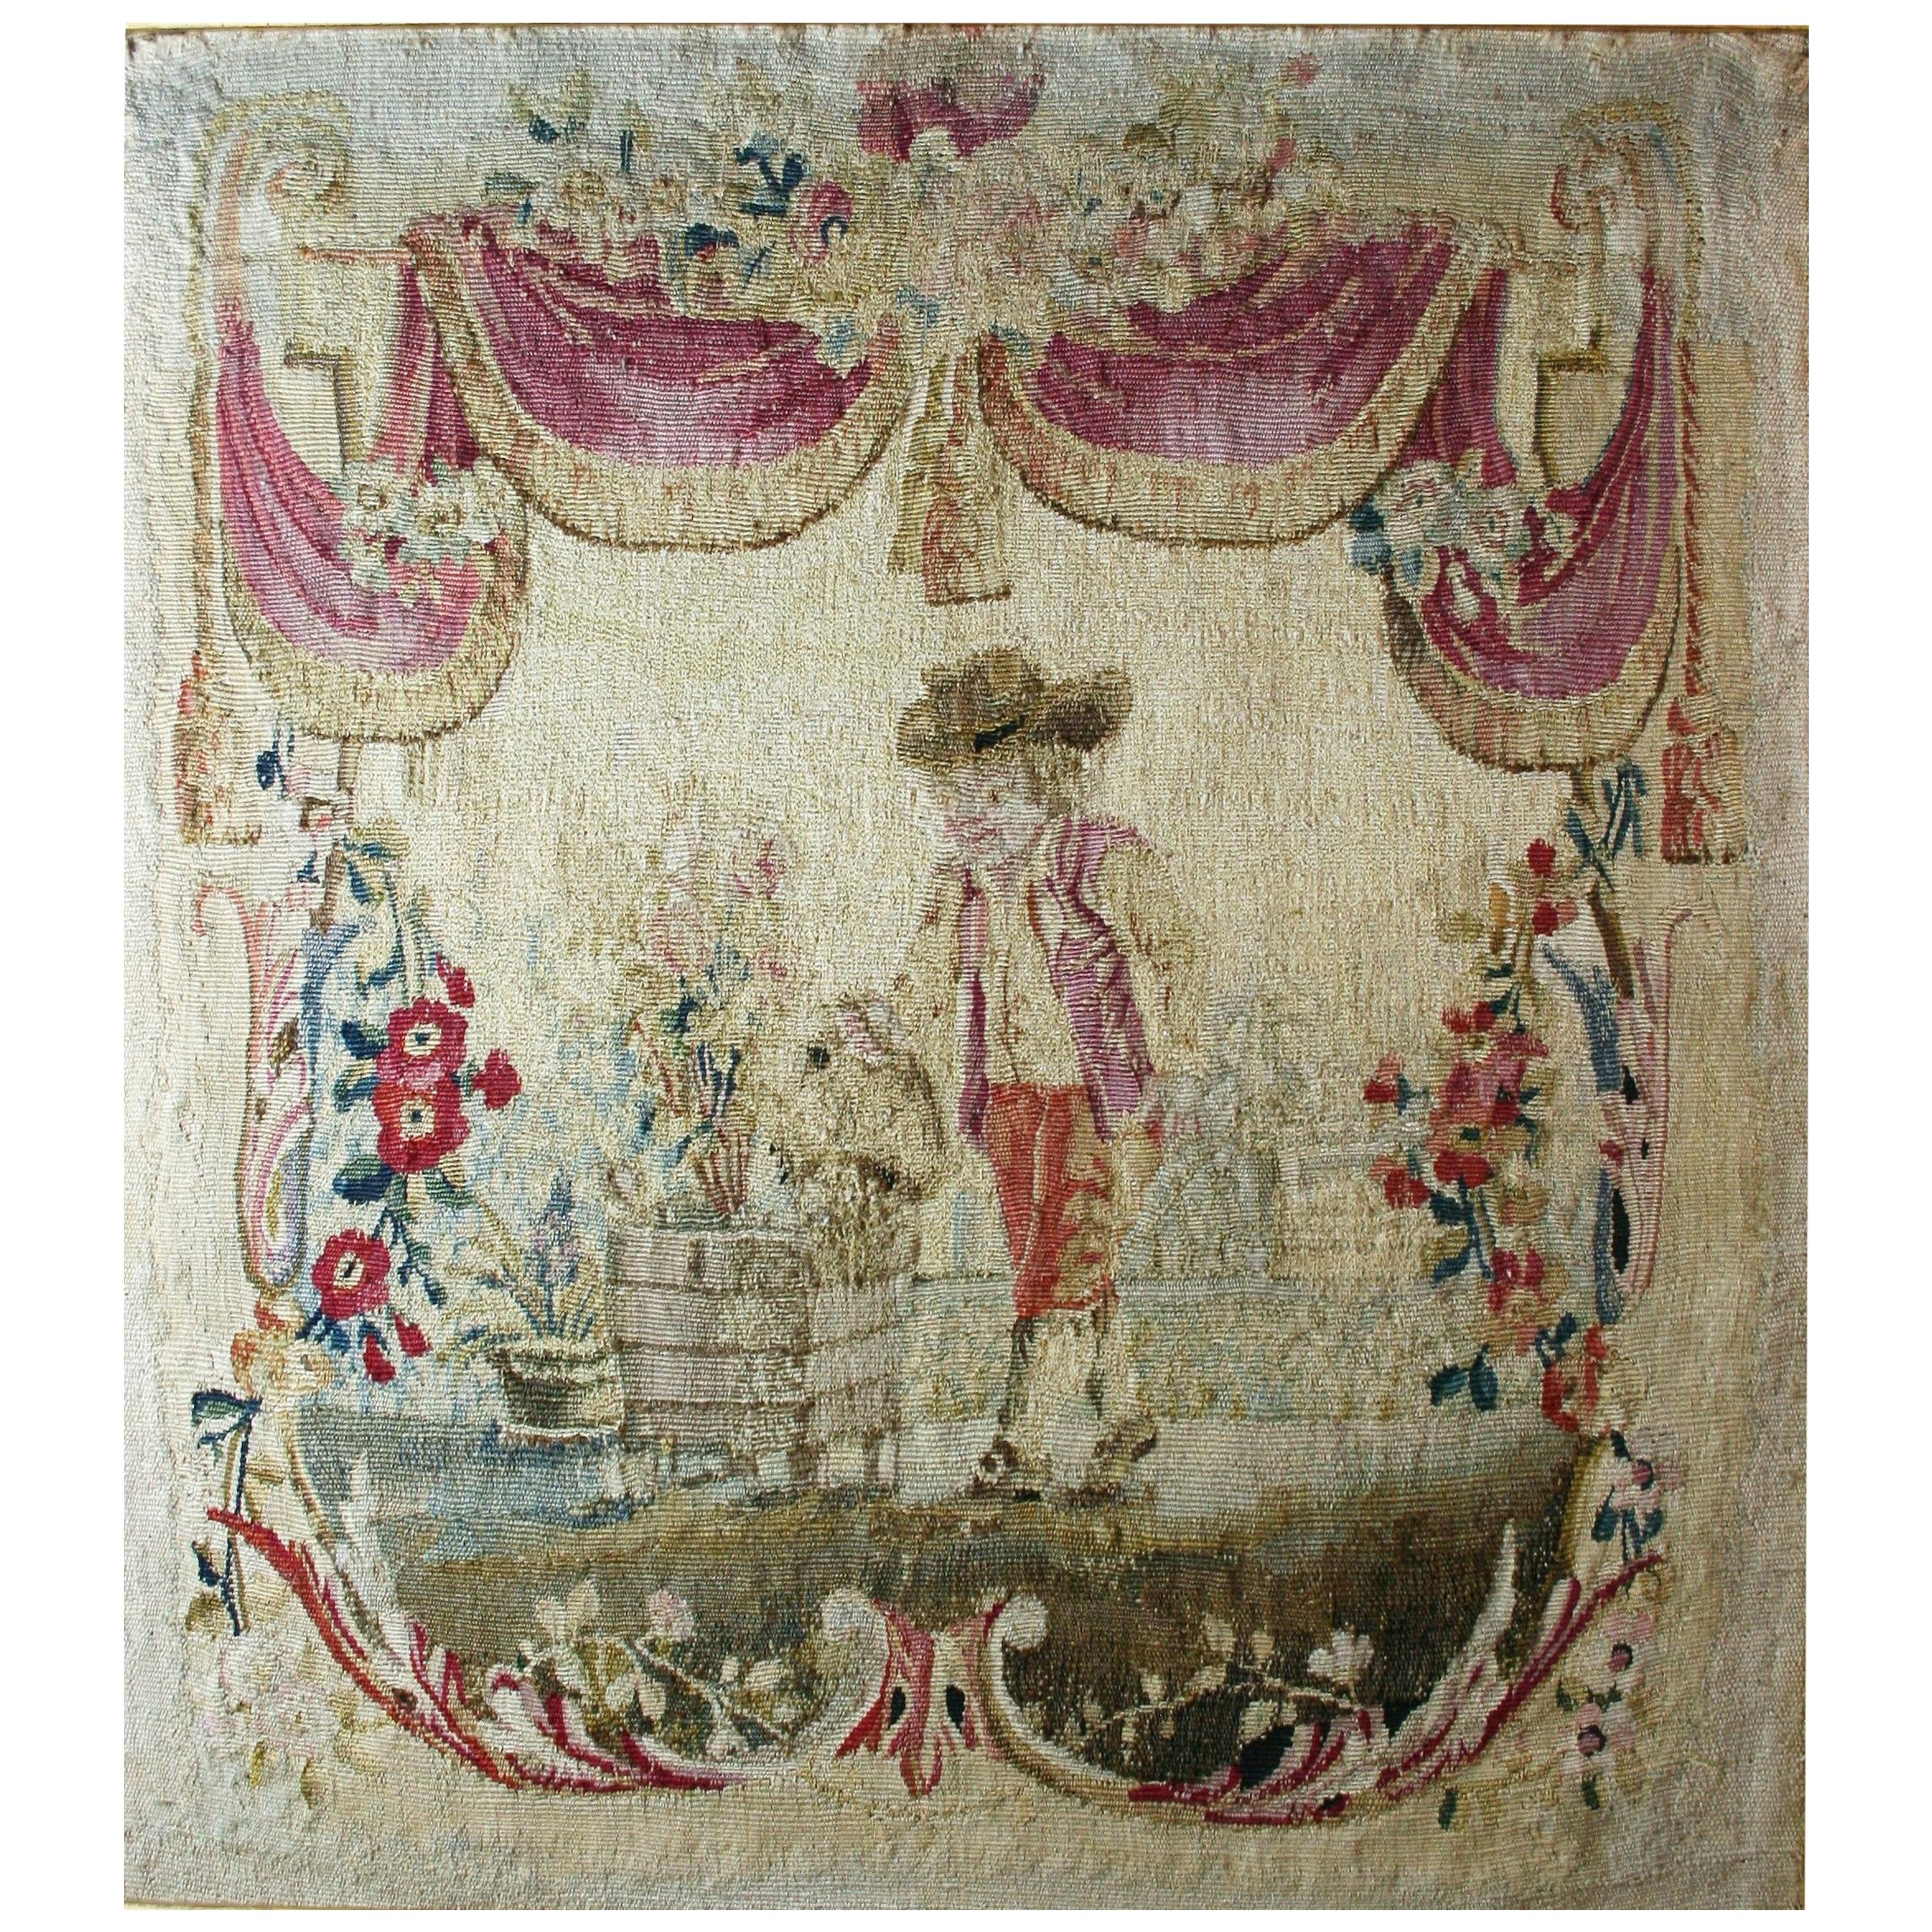 18th Century Aubusson Tapestry "Le Jardinier"